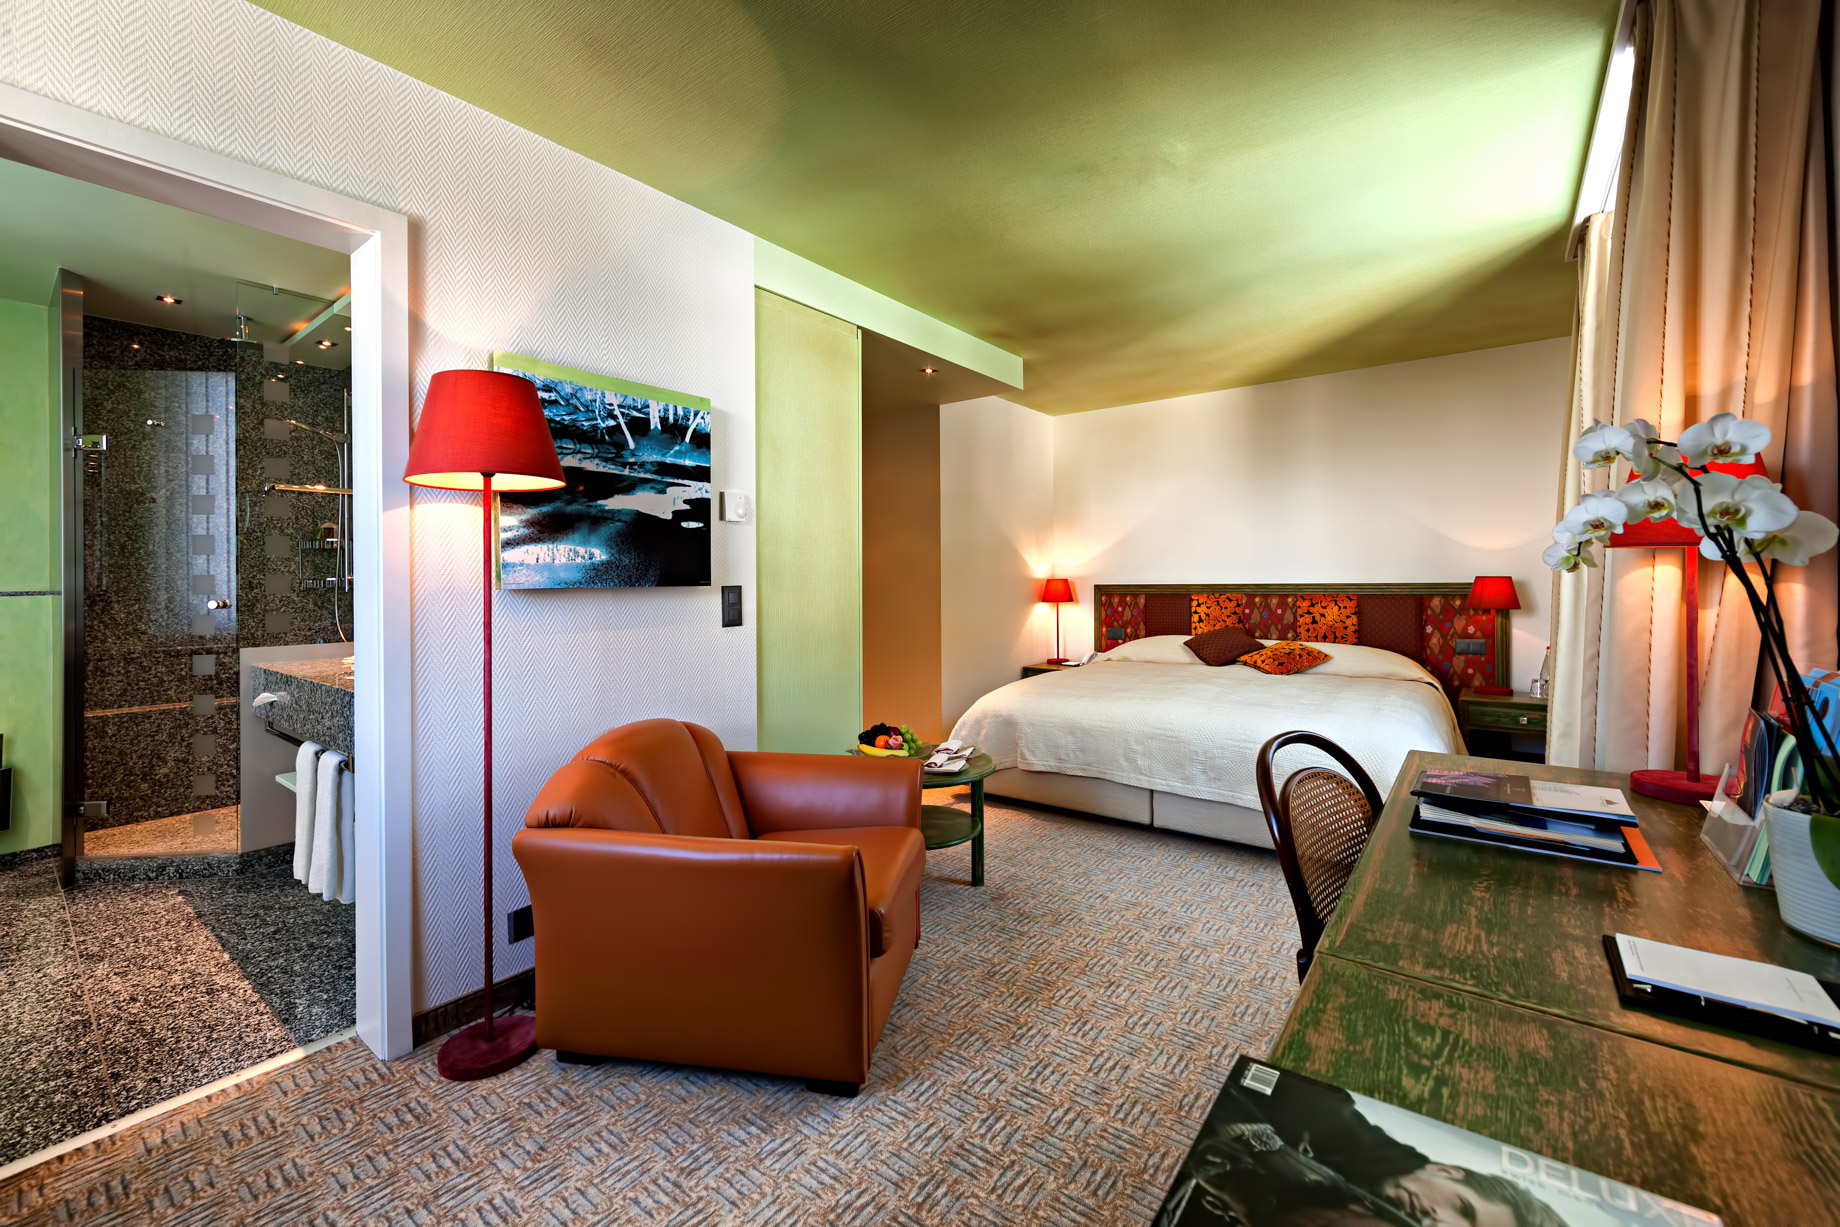 Tschuggen Grand Hotel - Arosa, Switzerland - Suite